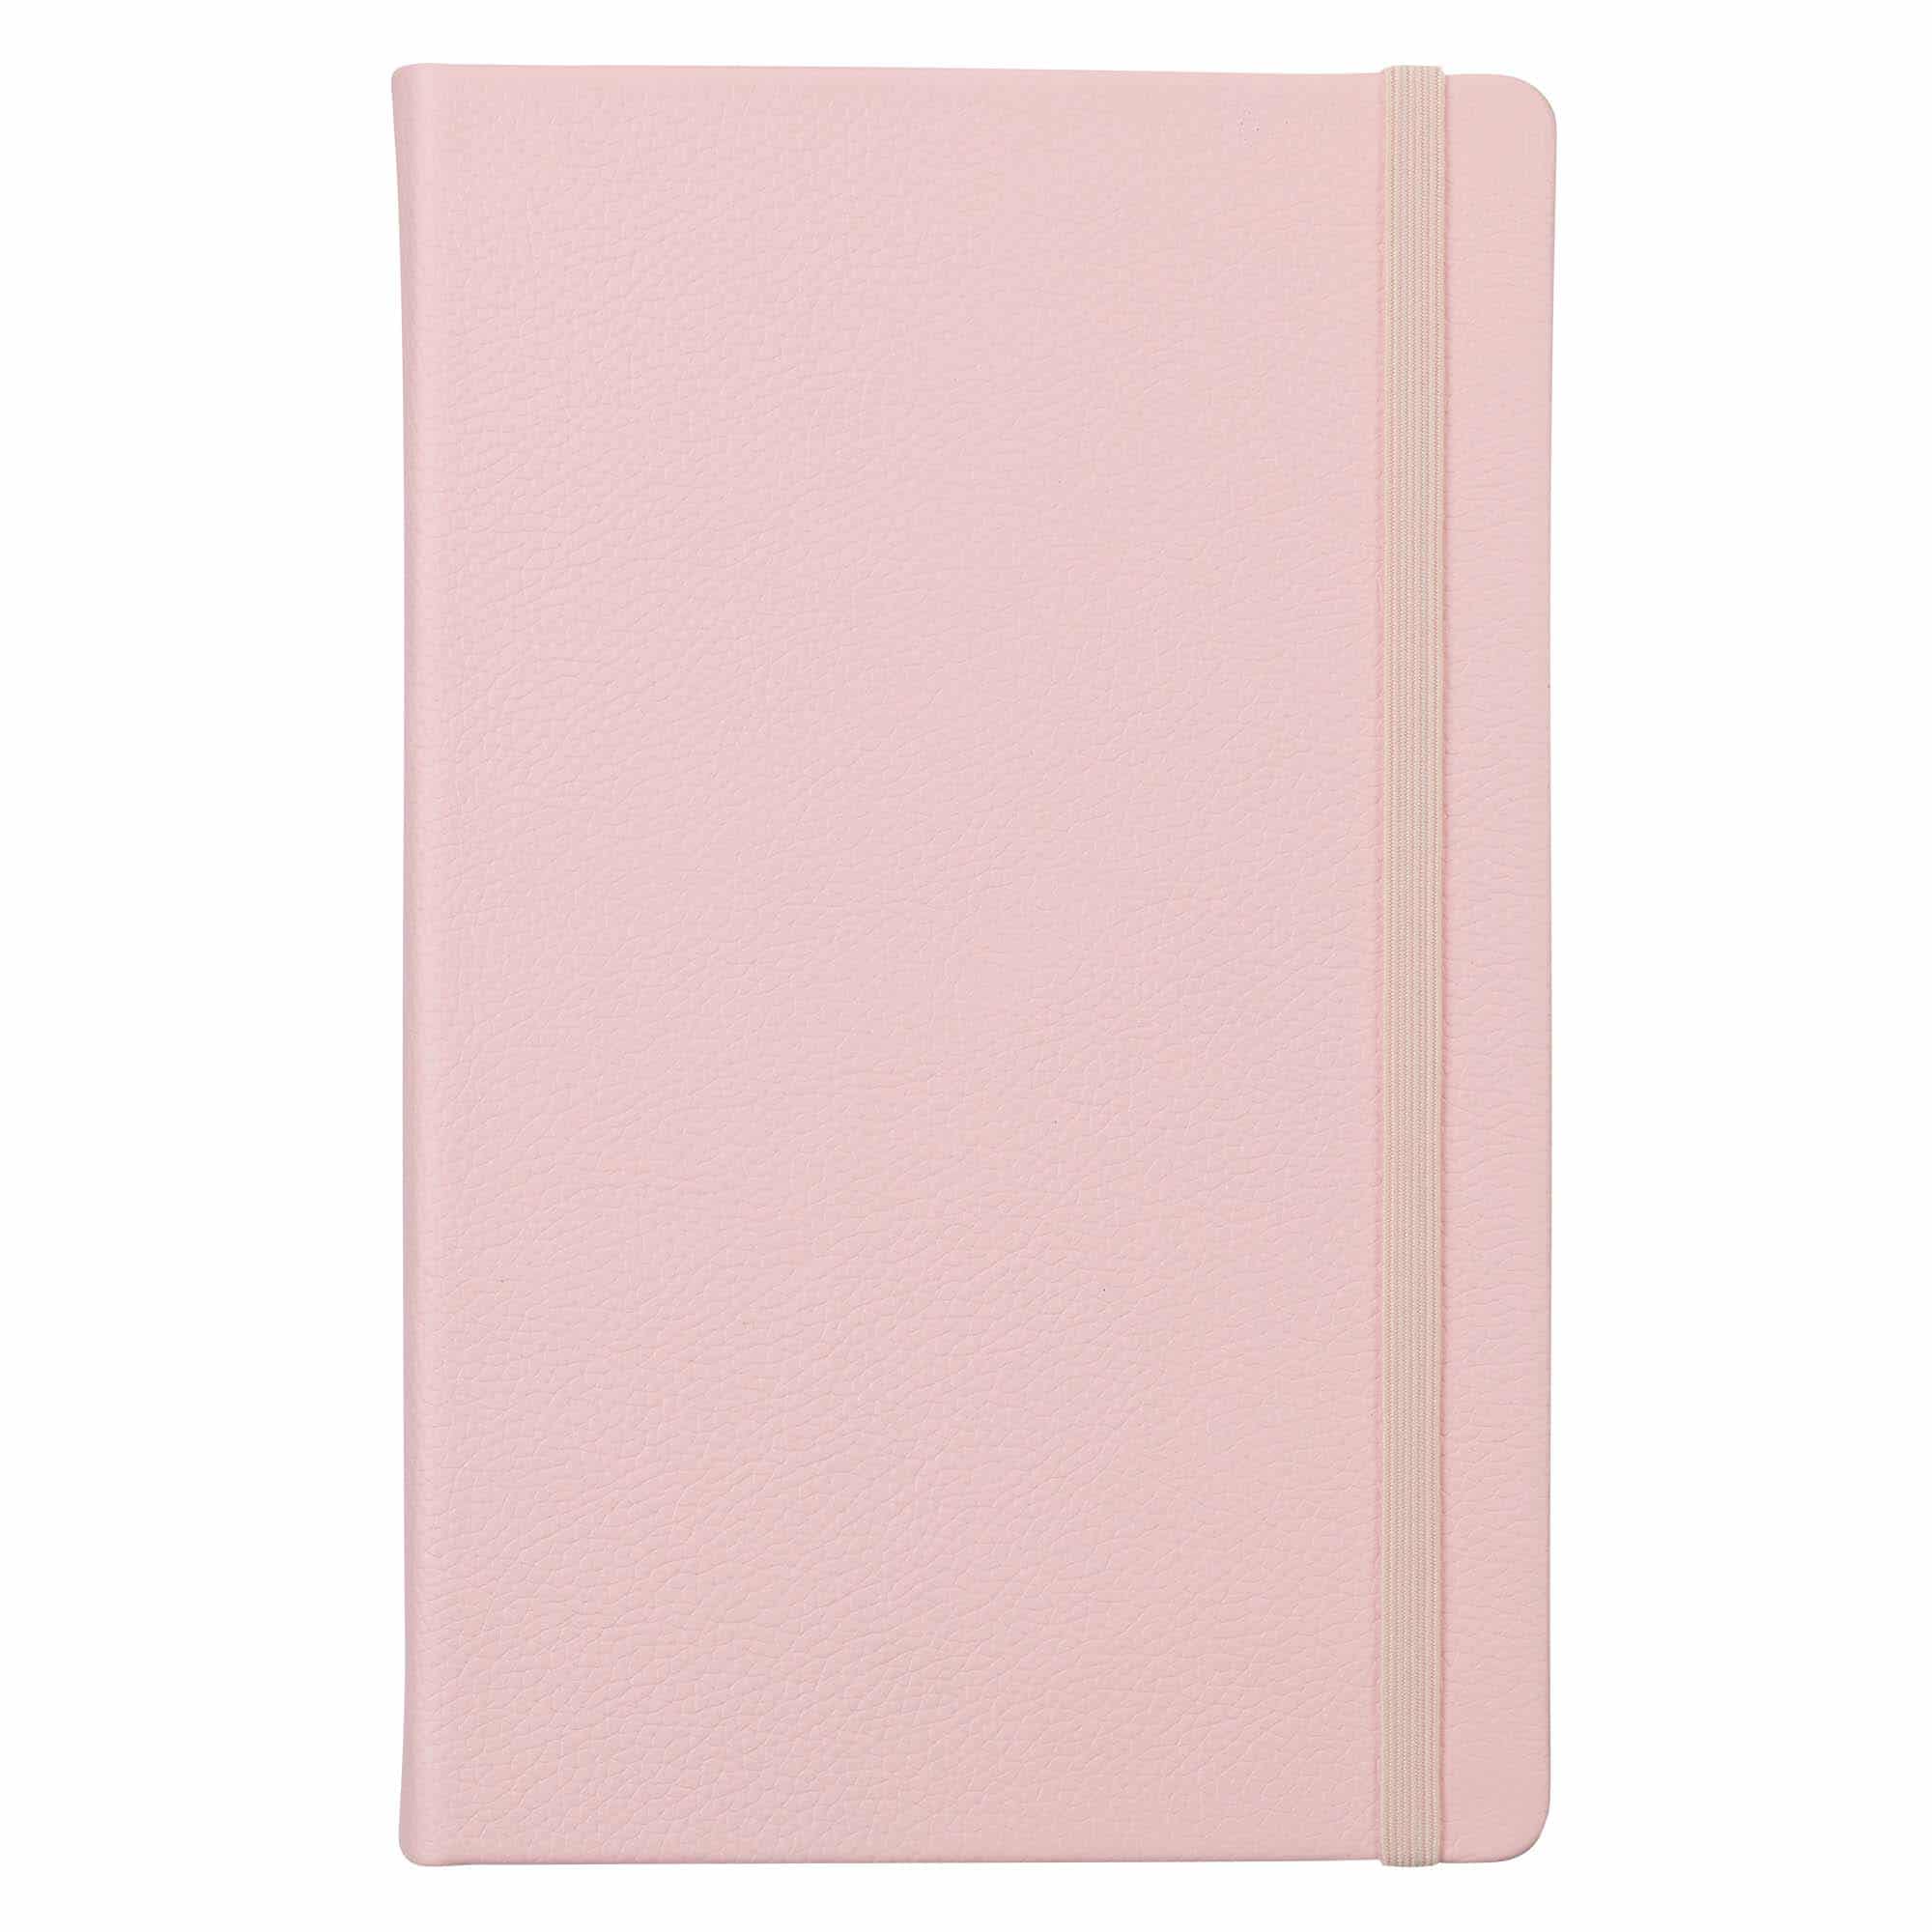 Quartz Pink Leather Notebook